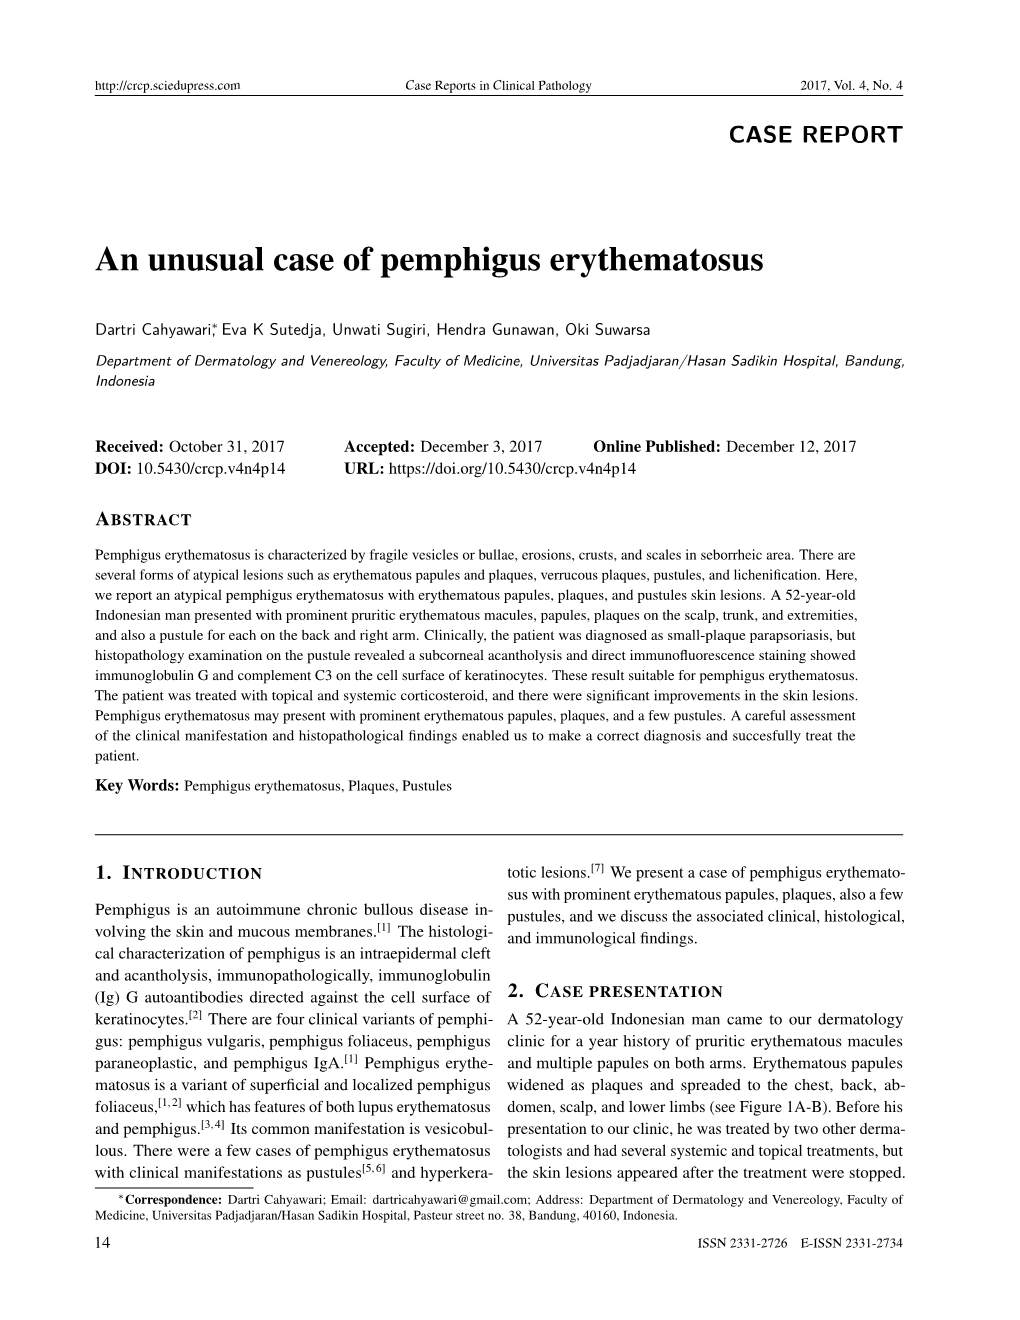 An Unusual Case of Pemphigus Erythematosus